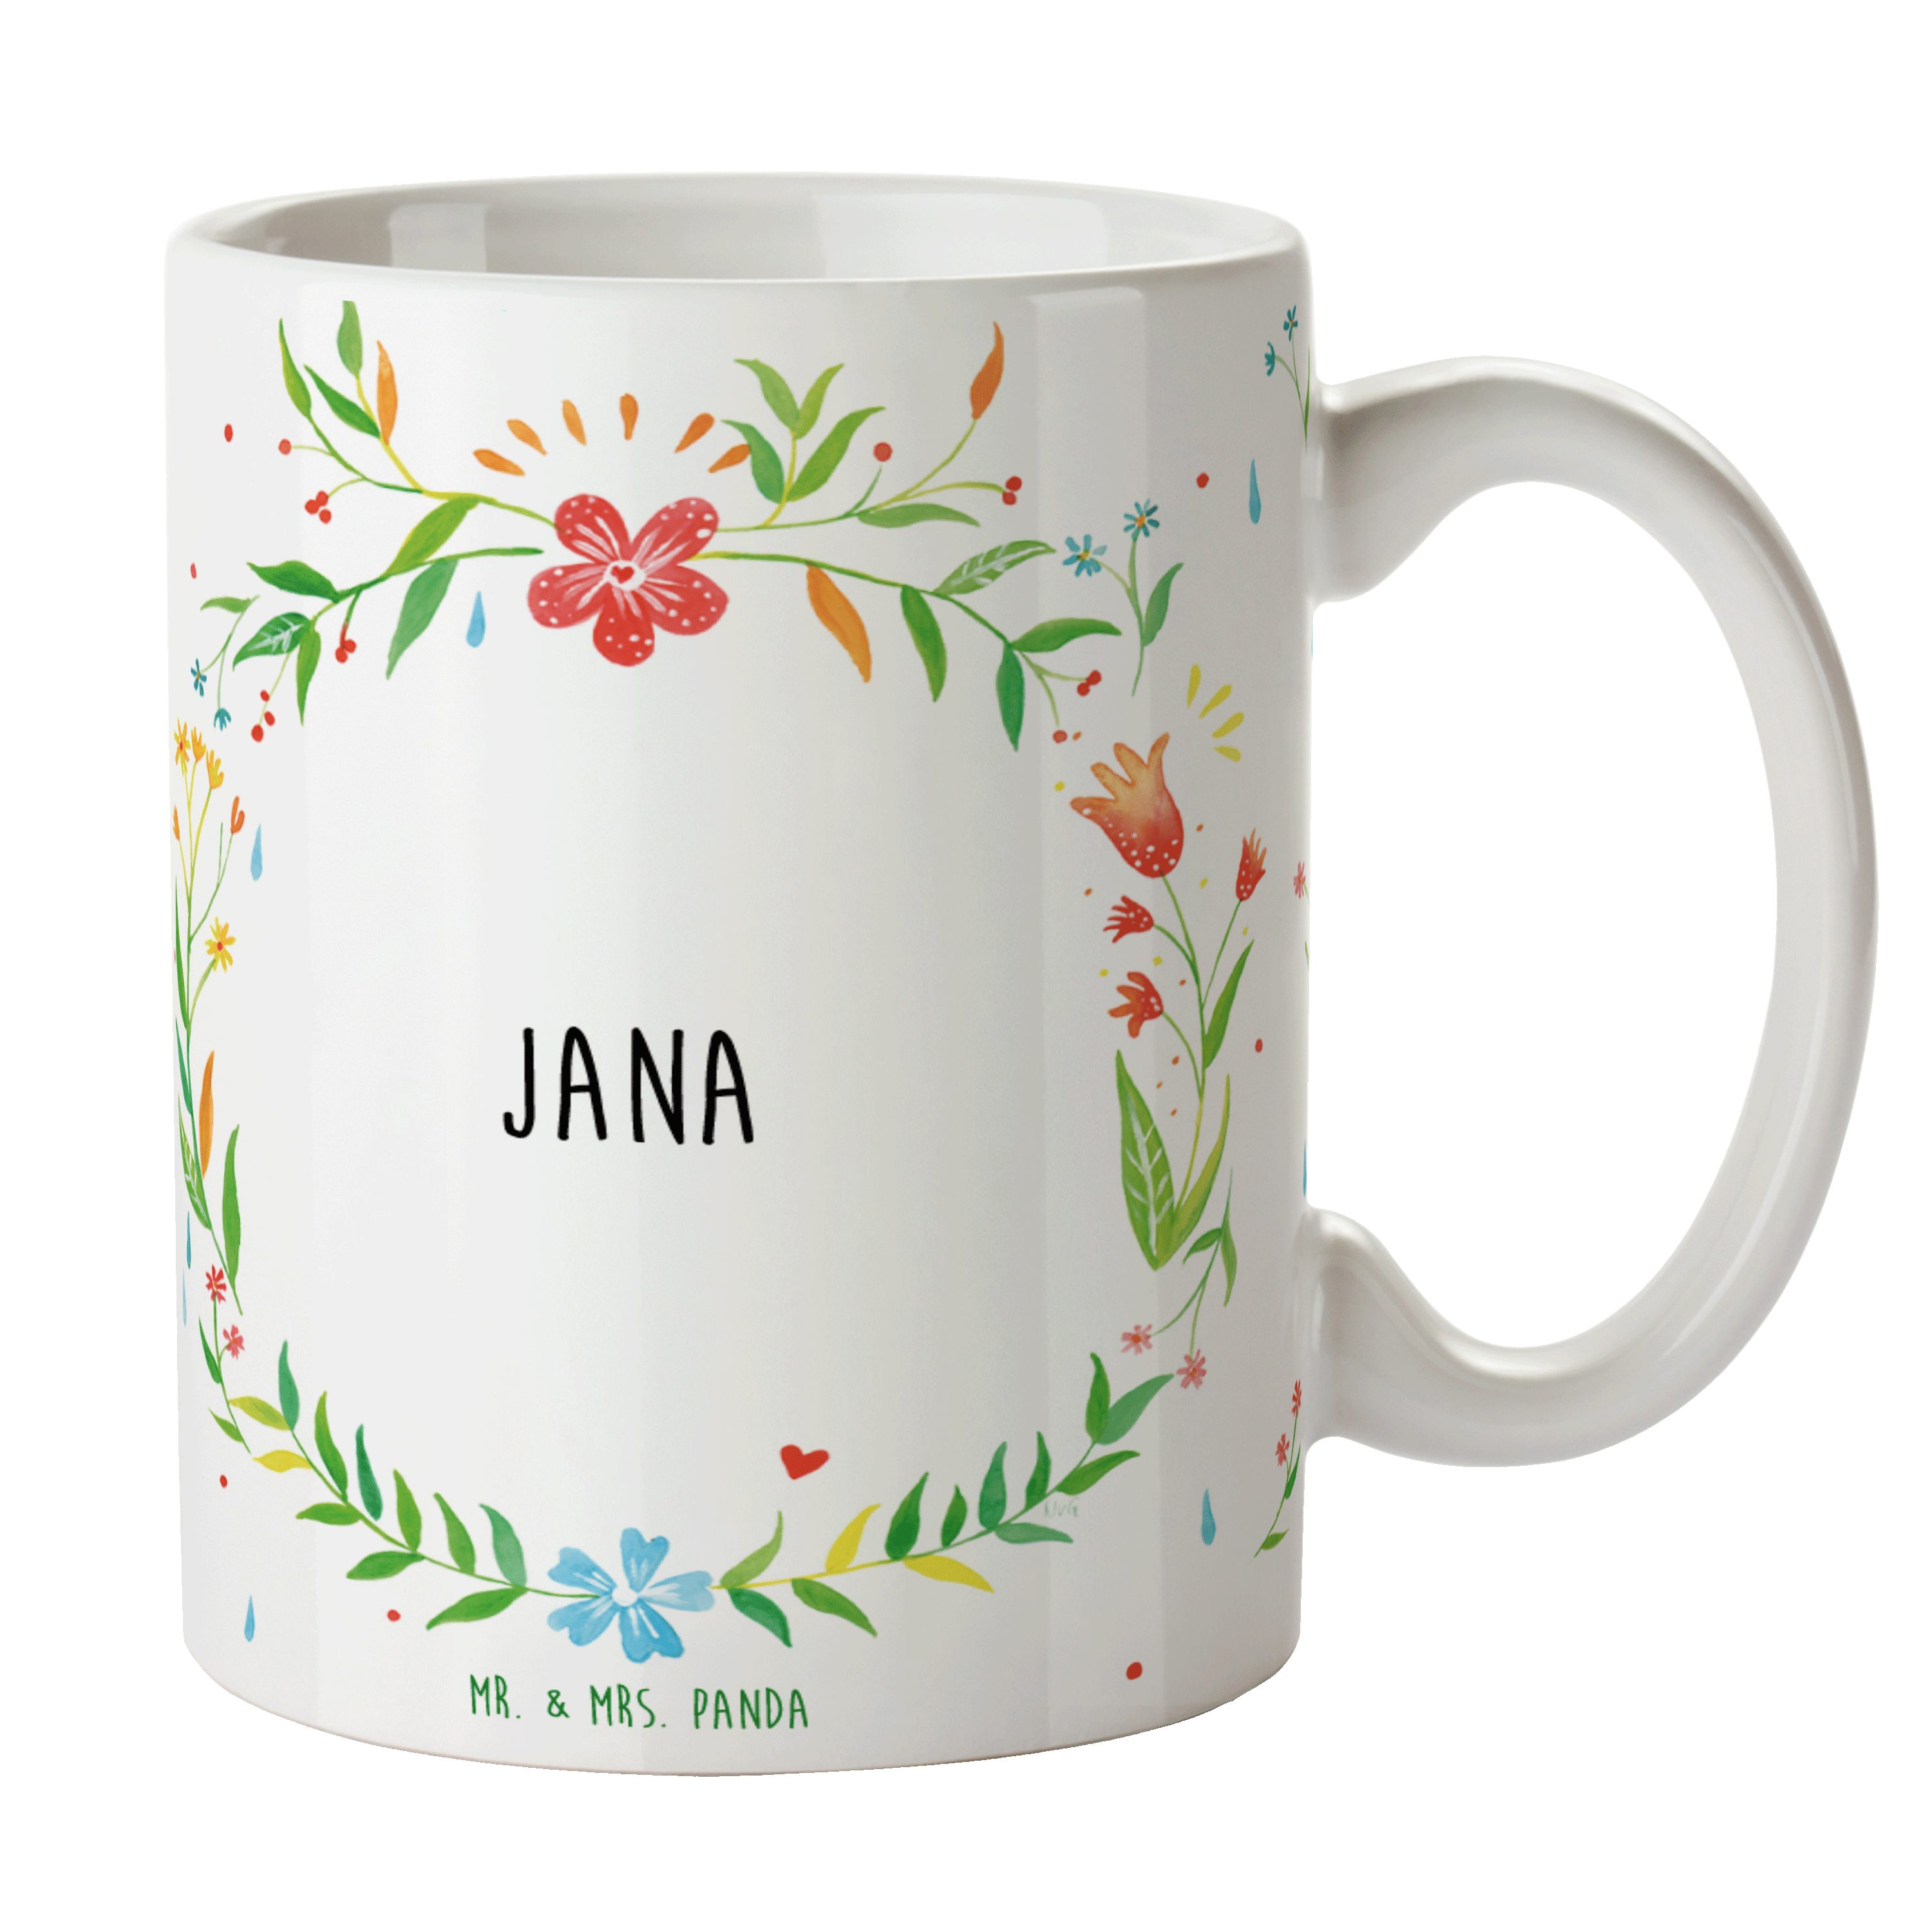 Mr. & Mrs. Panda Tasse Jana - Geschenk, Kaffeetasse, Kaffeebecher, Teetasse, Tasse Motive, P, Keramik